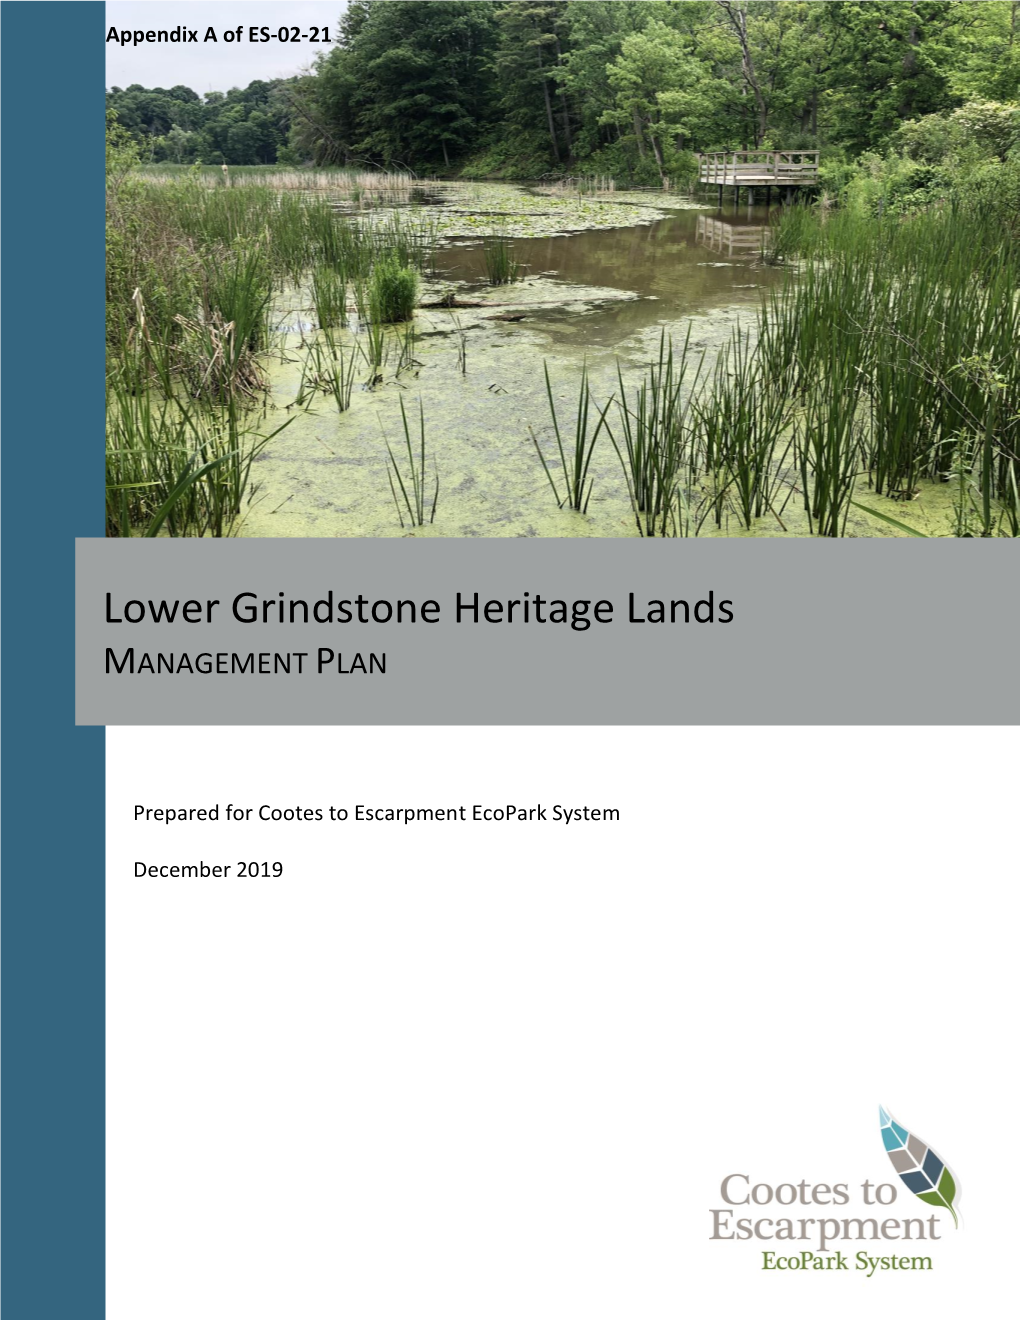 Cootes to Escarpment Ecopark System Lower Grindstone Heritage Lands